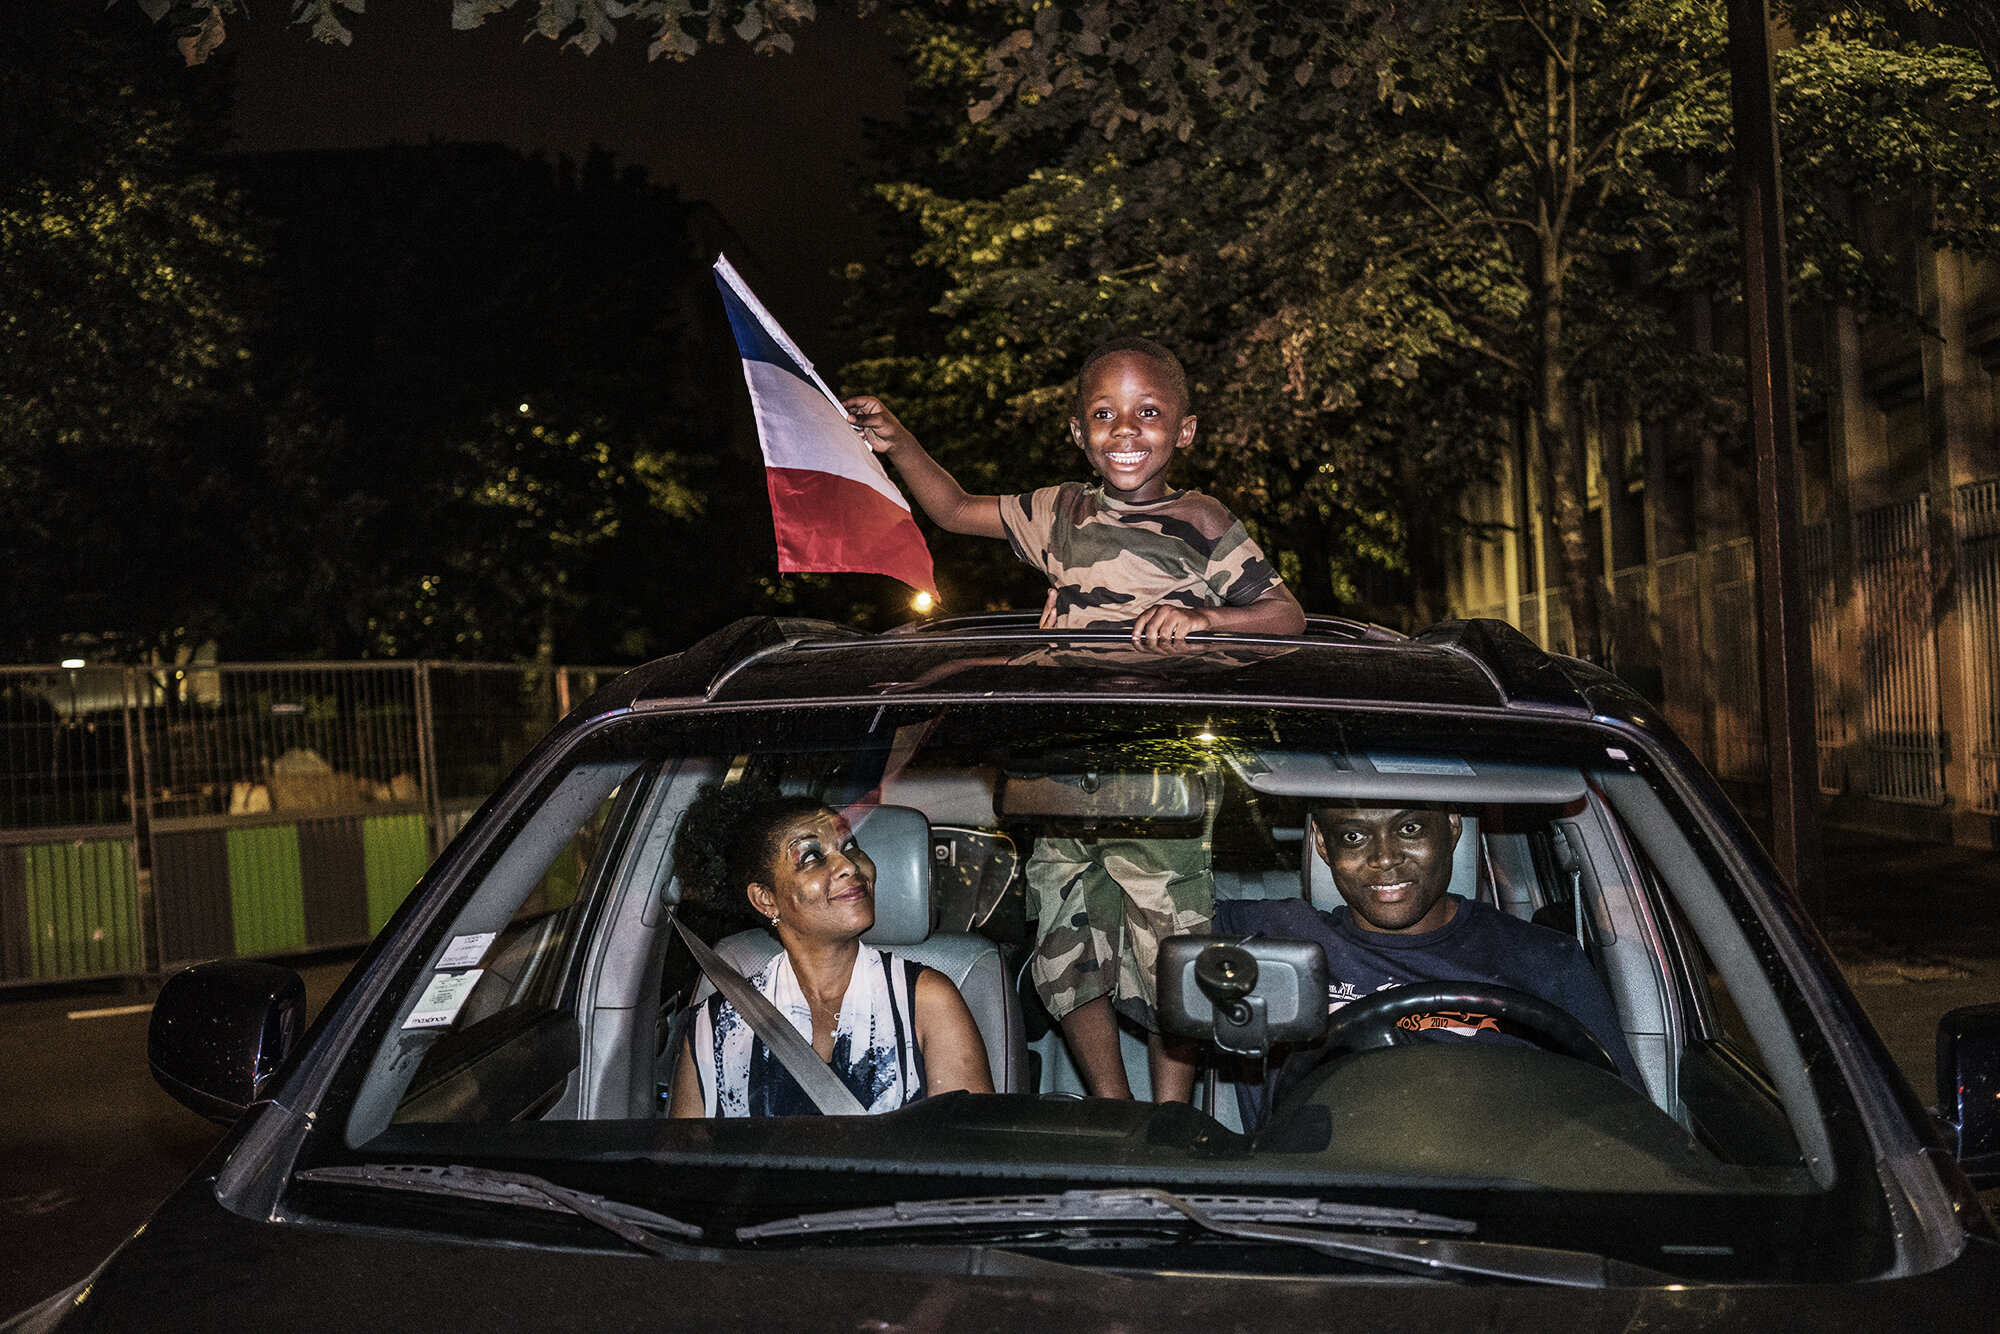 Paris_Street_2018_Young_Boy_waving_French_Flag-004.jpg